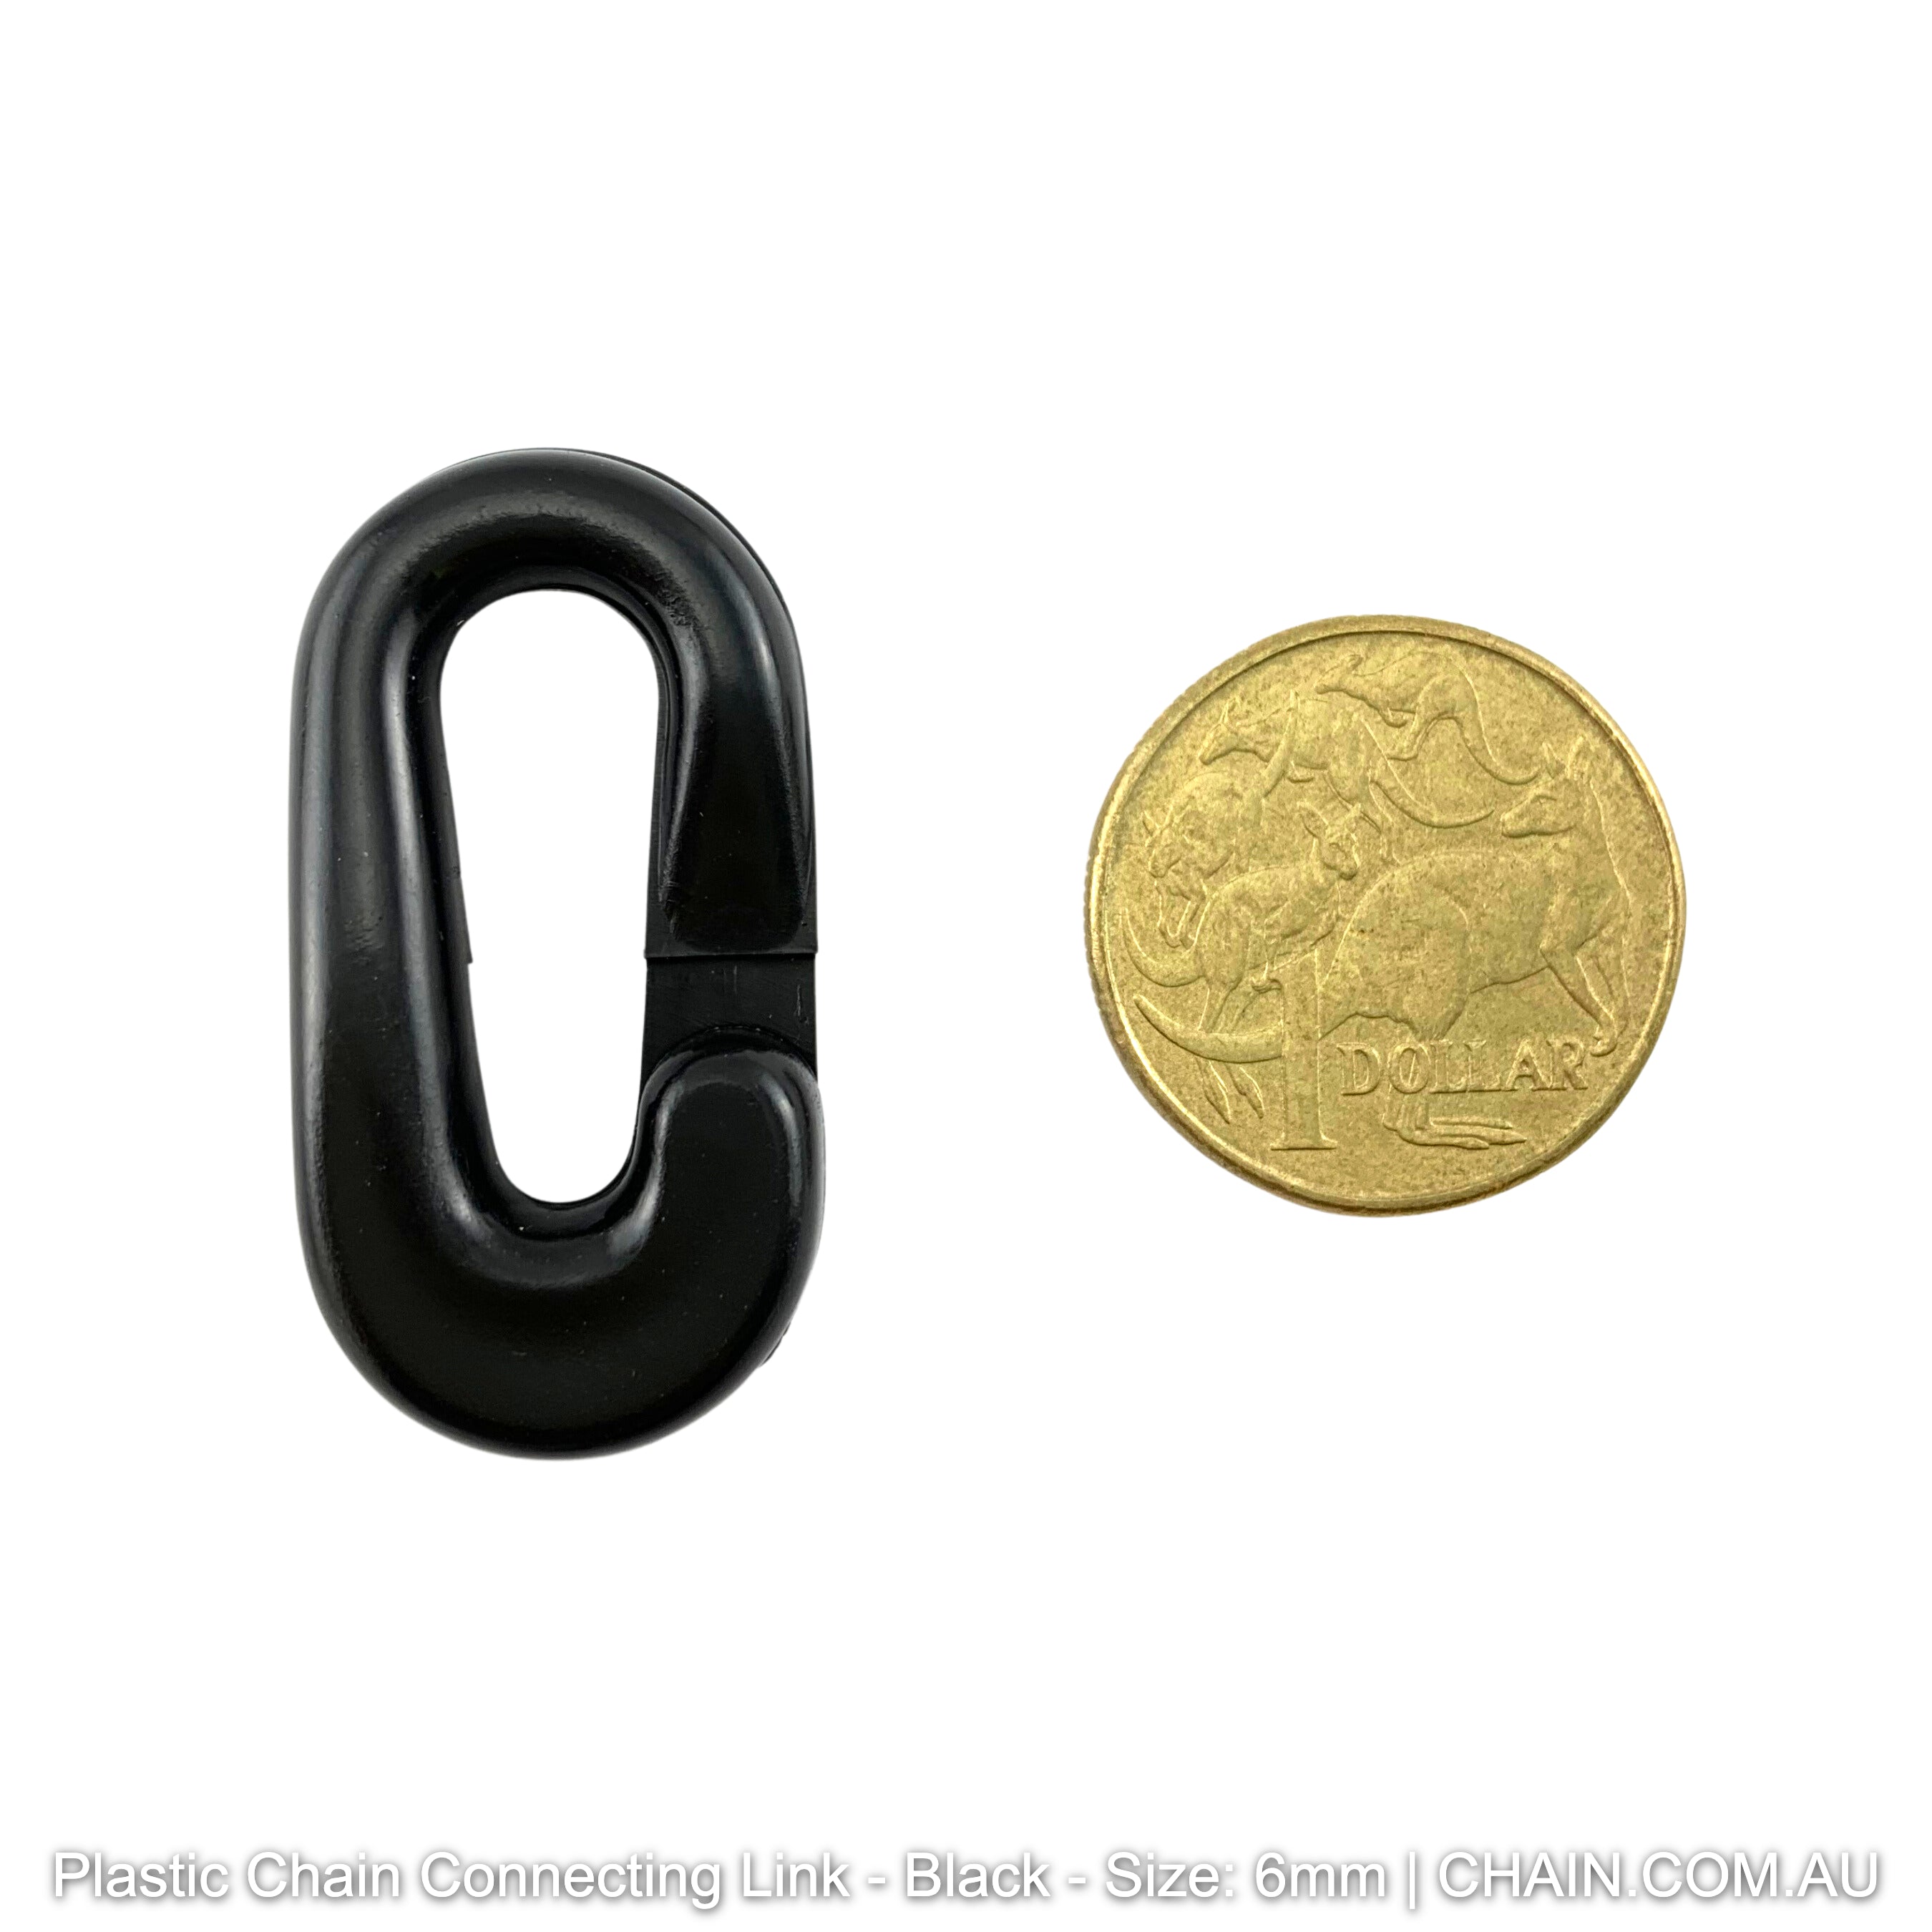 Black plastic chain connecting link, size 6mm. Australia wide shipping. Shop: chain.com.au